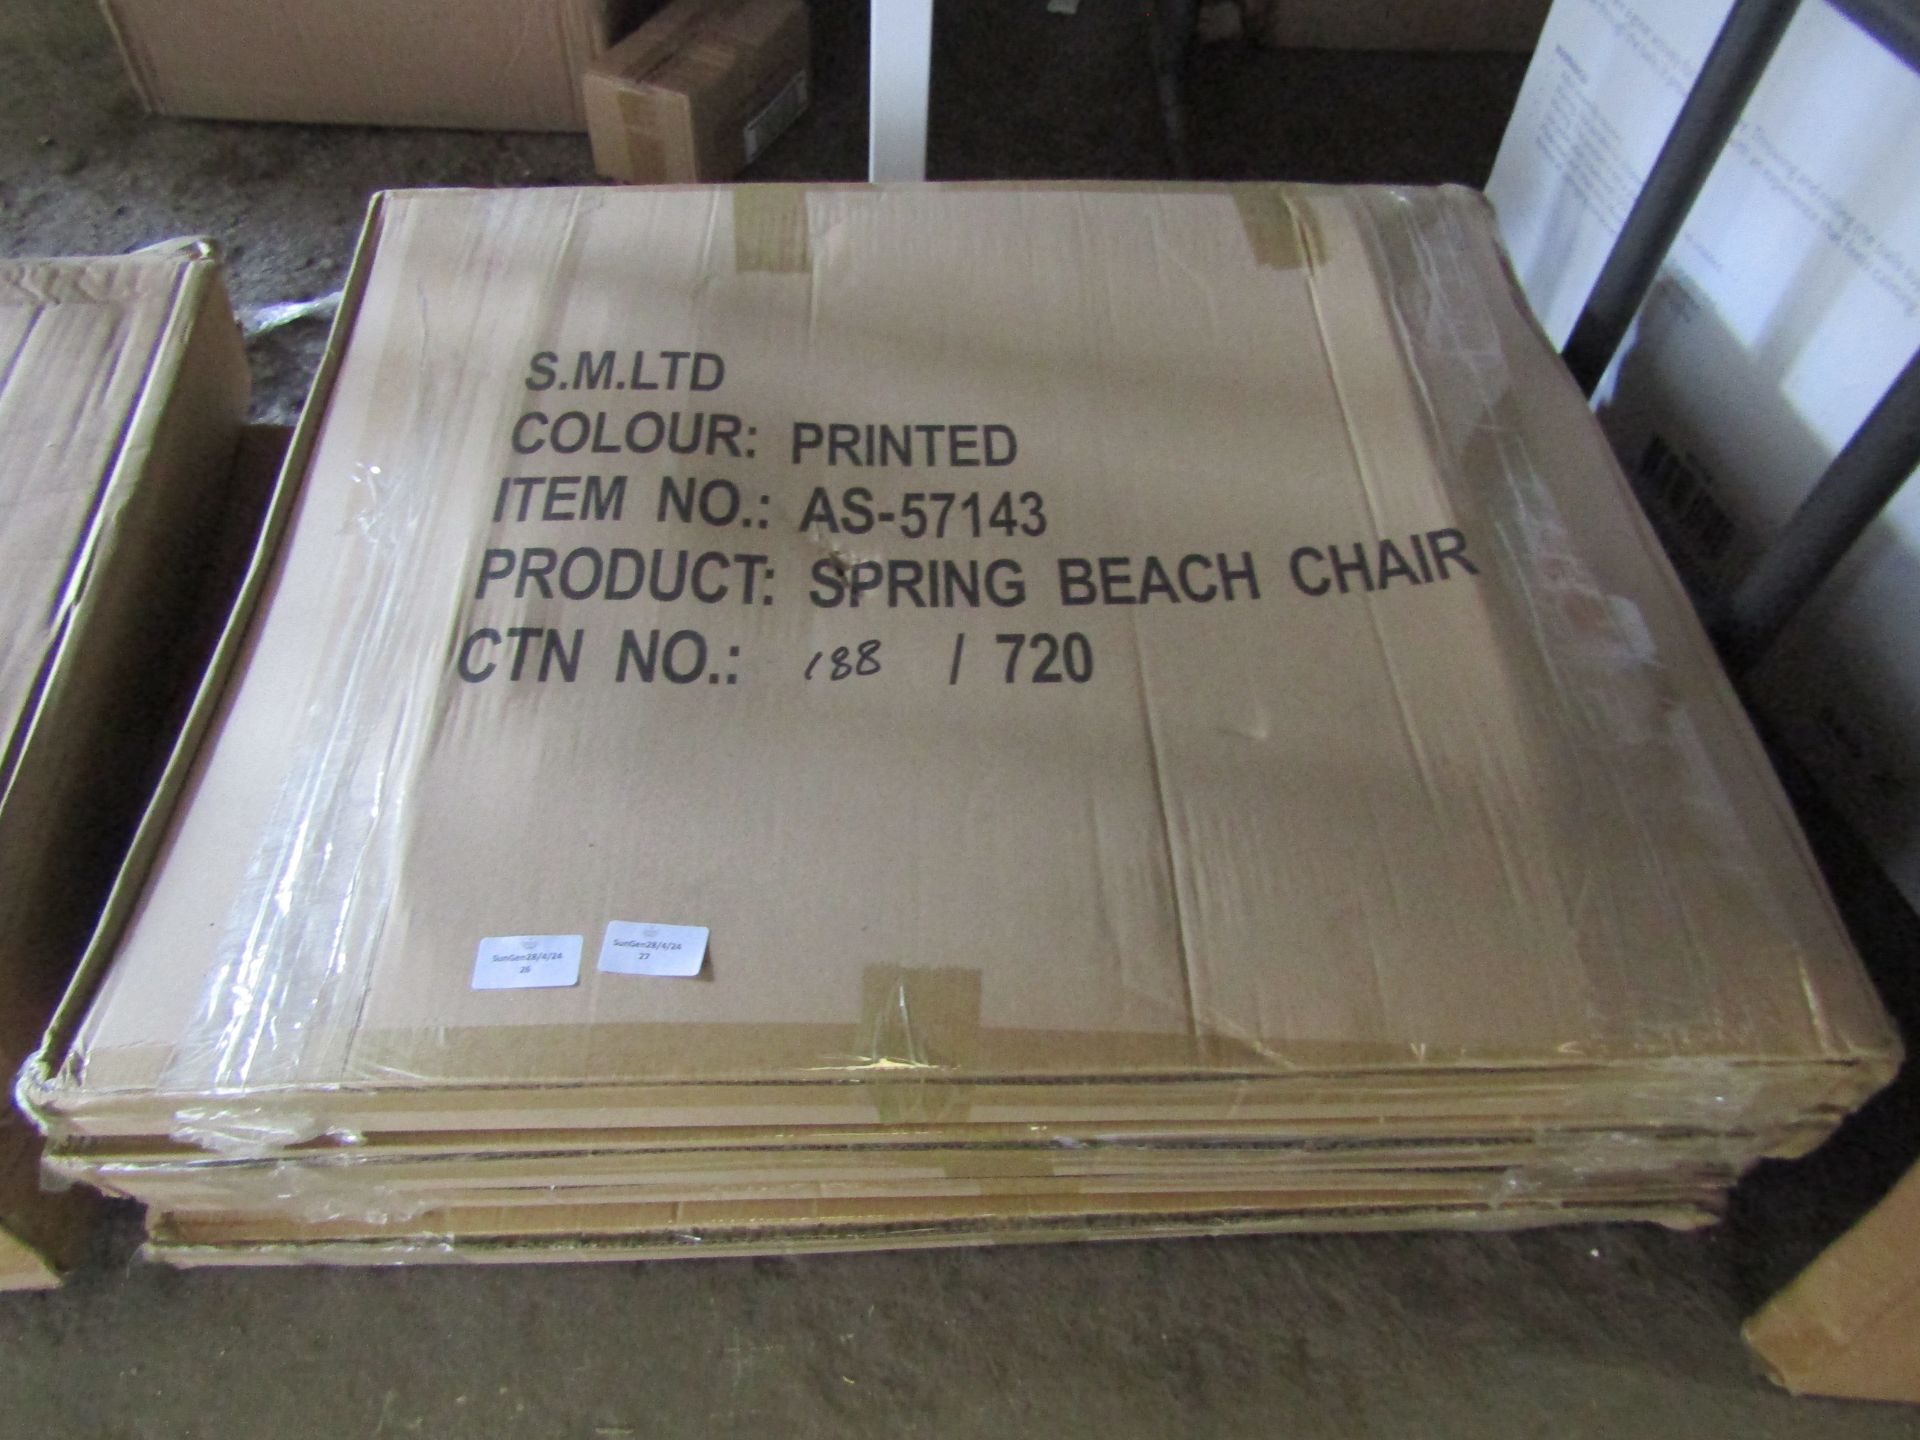 2x Asab Printed Spring Beach Chair - Unchecked & Boxed.